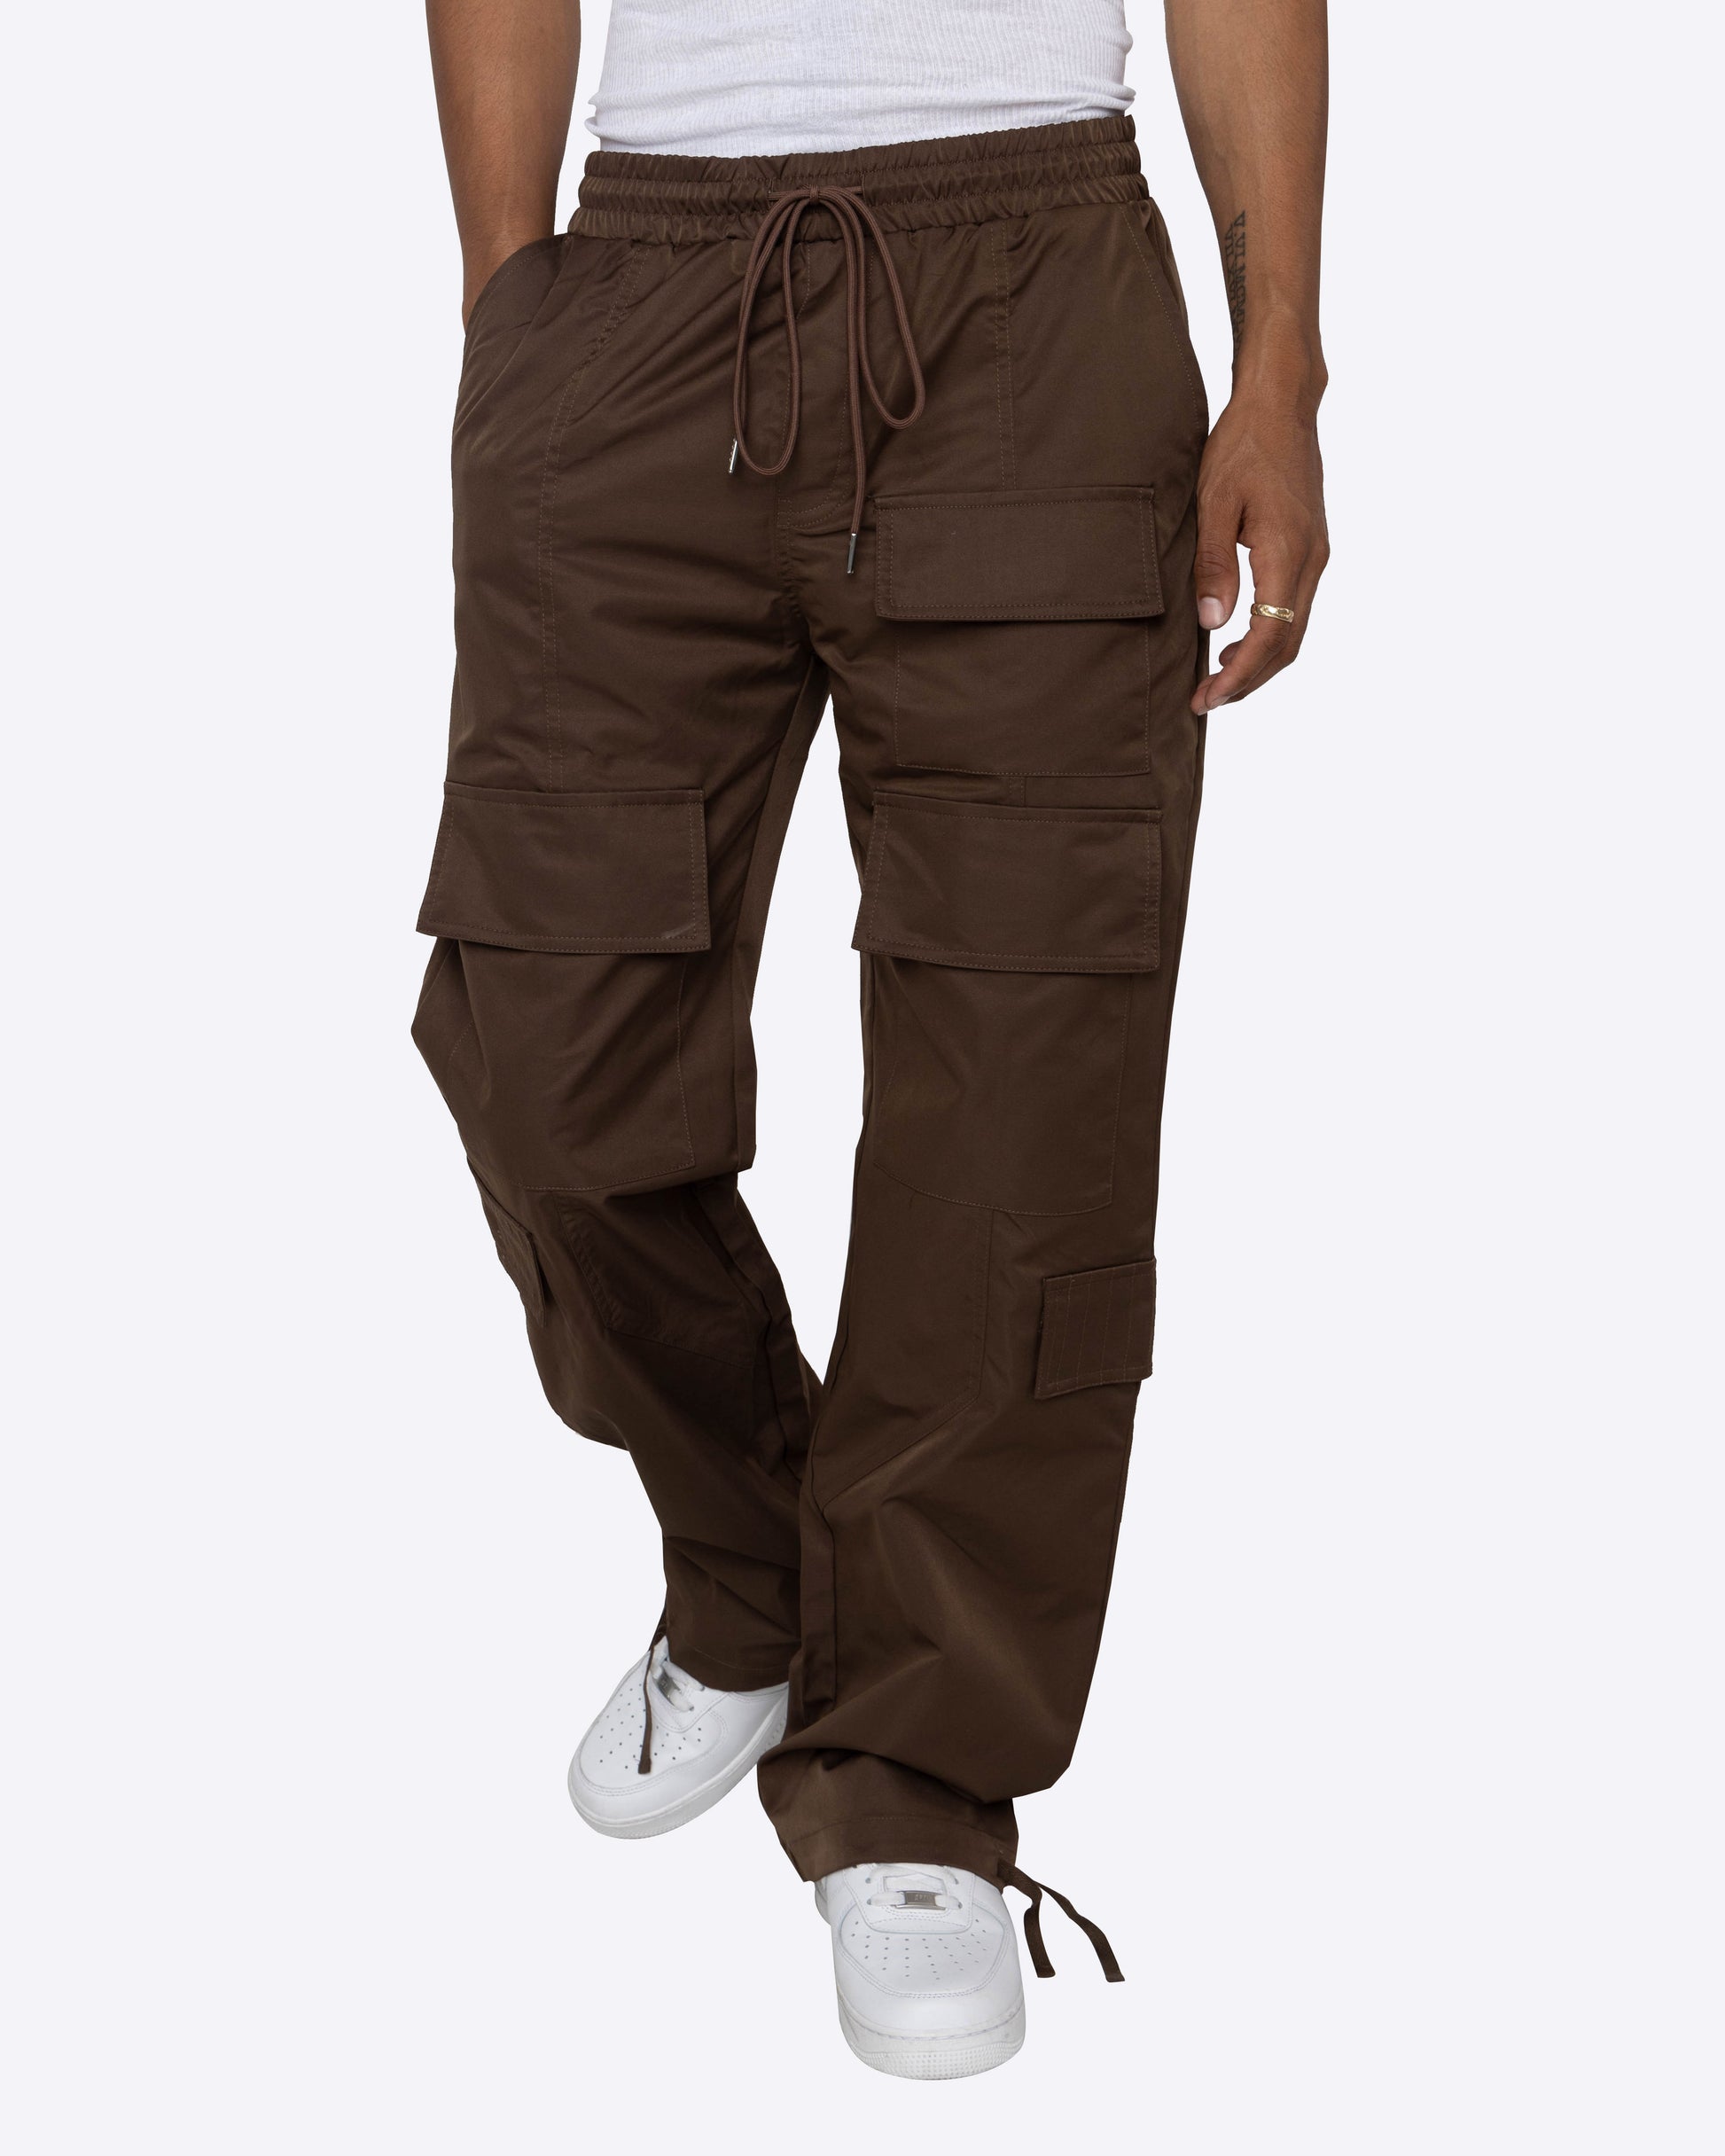 EPTM Easy Cargo Pants - Brown 2X/38